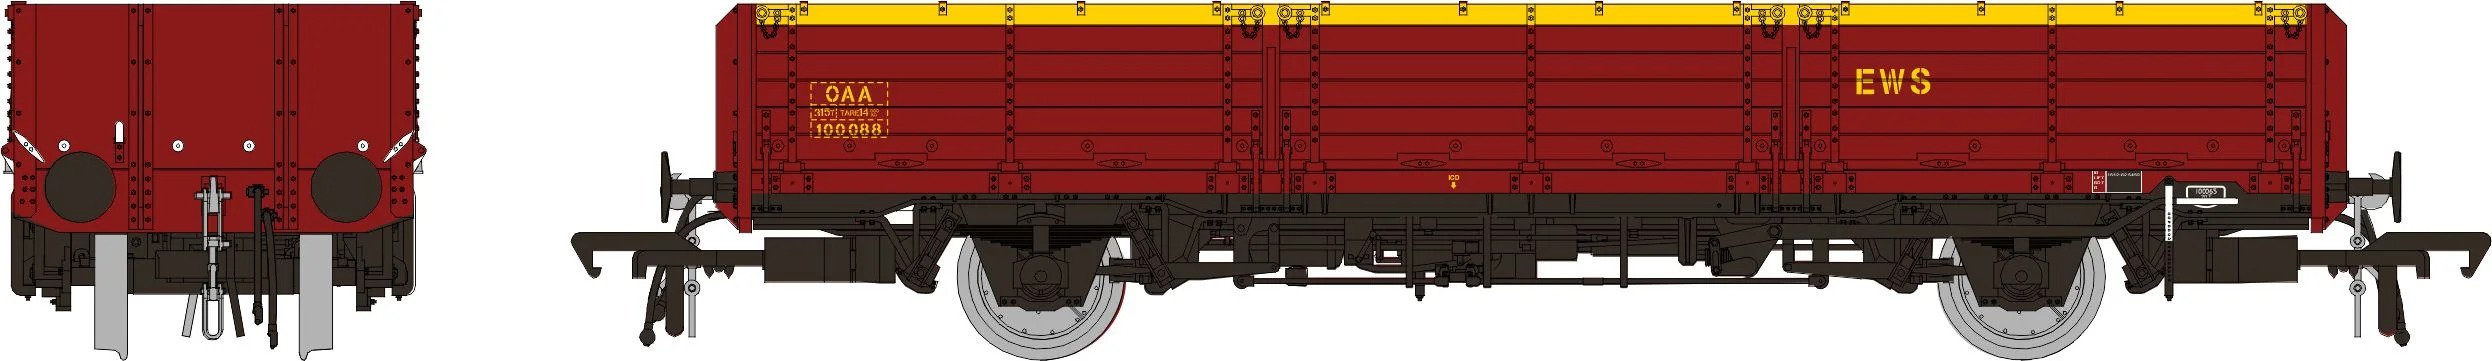 Rapido Trains 915017 OAA No. 100088, EWS maroon